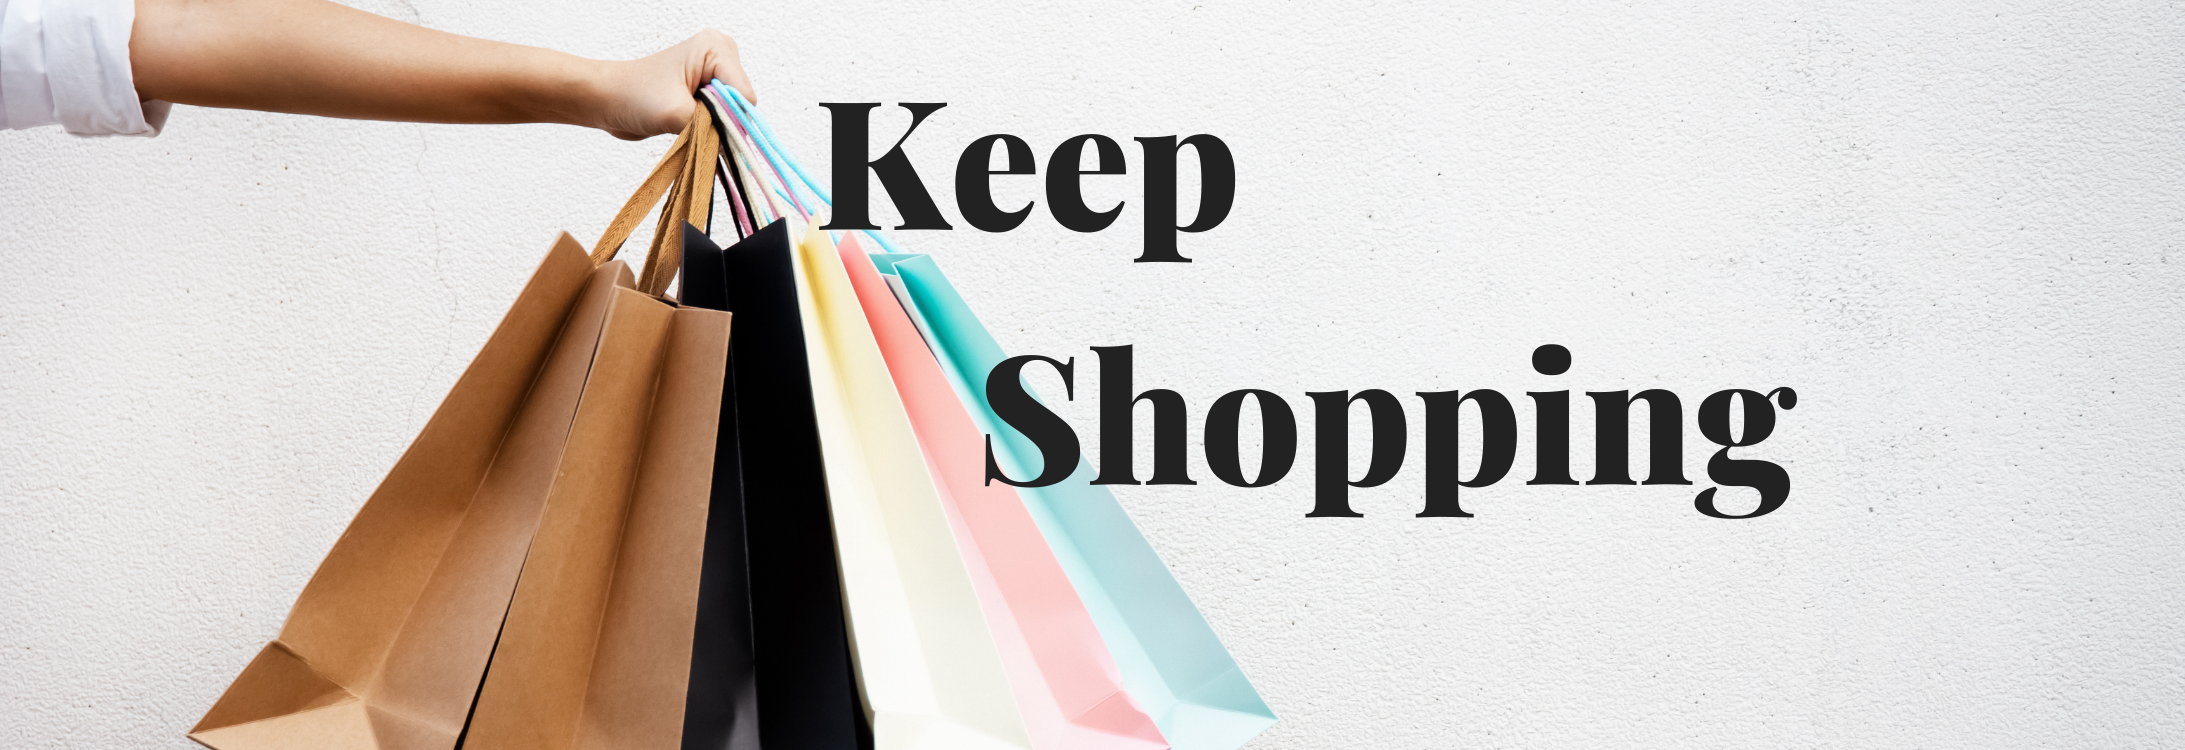 Keep Shopping blog cover